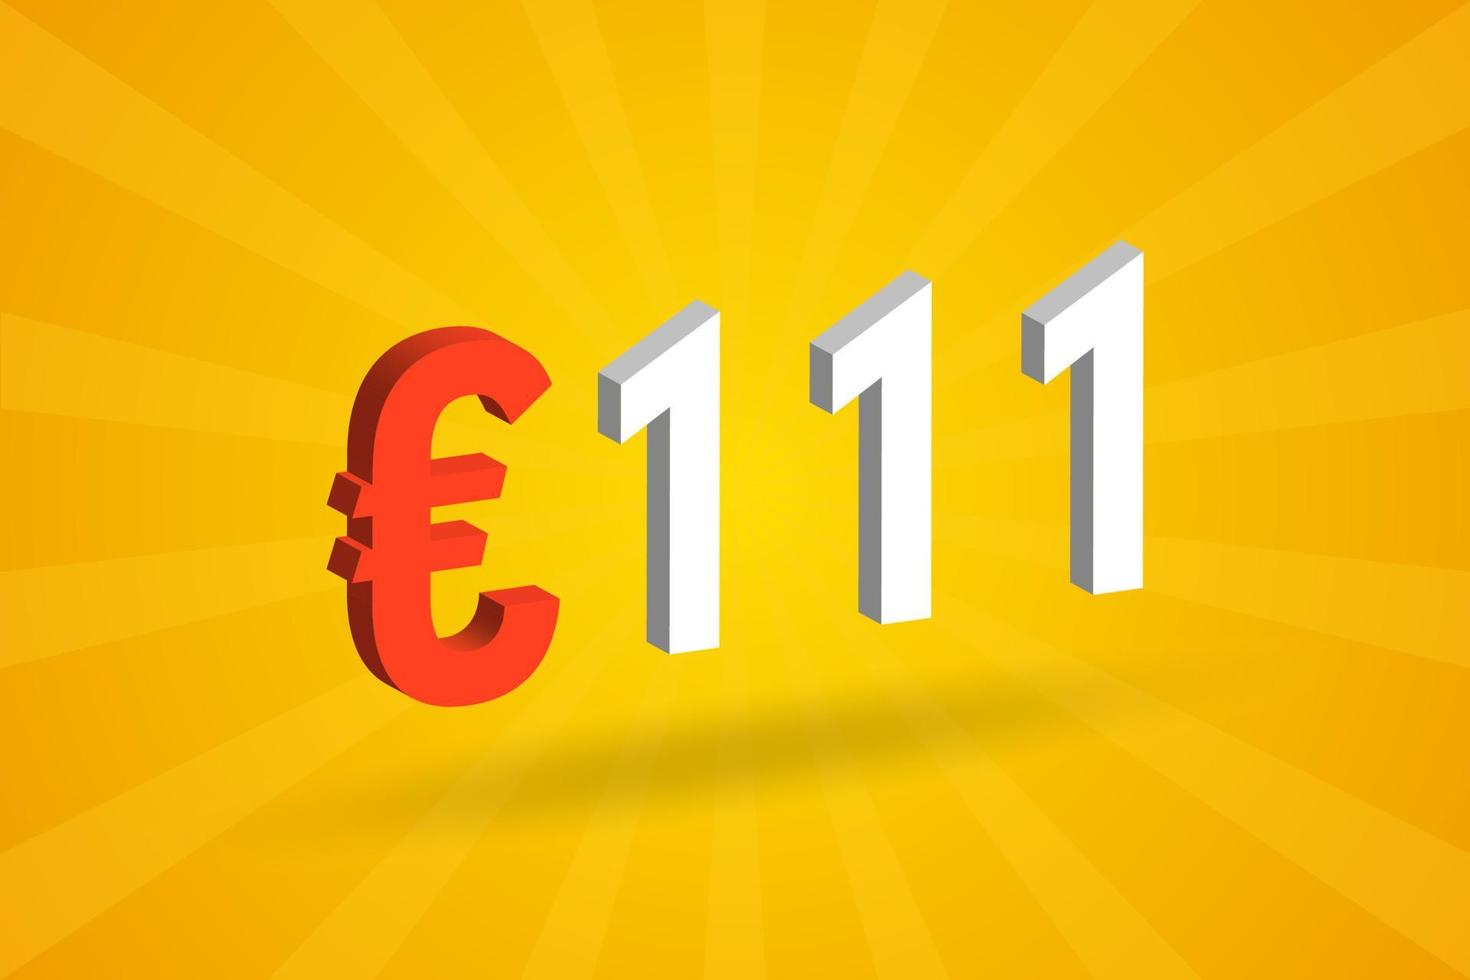 111 Euro Currency 3D vector text symbol. 3D 111 Euro European Union Money stock vector